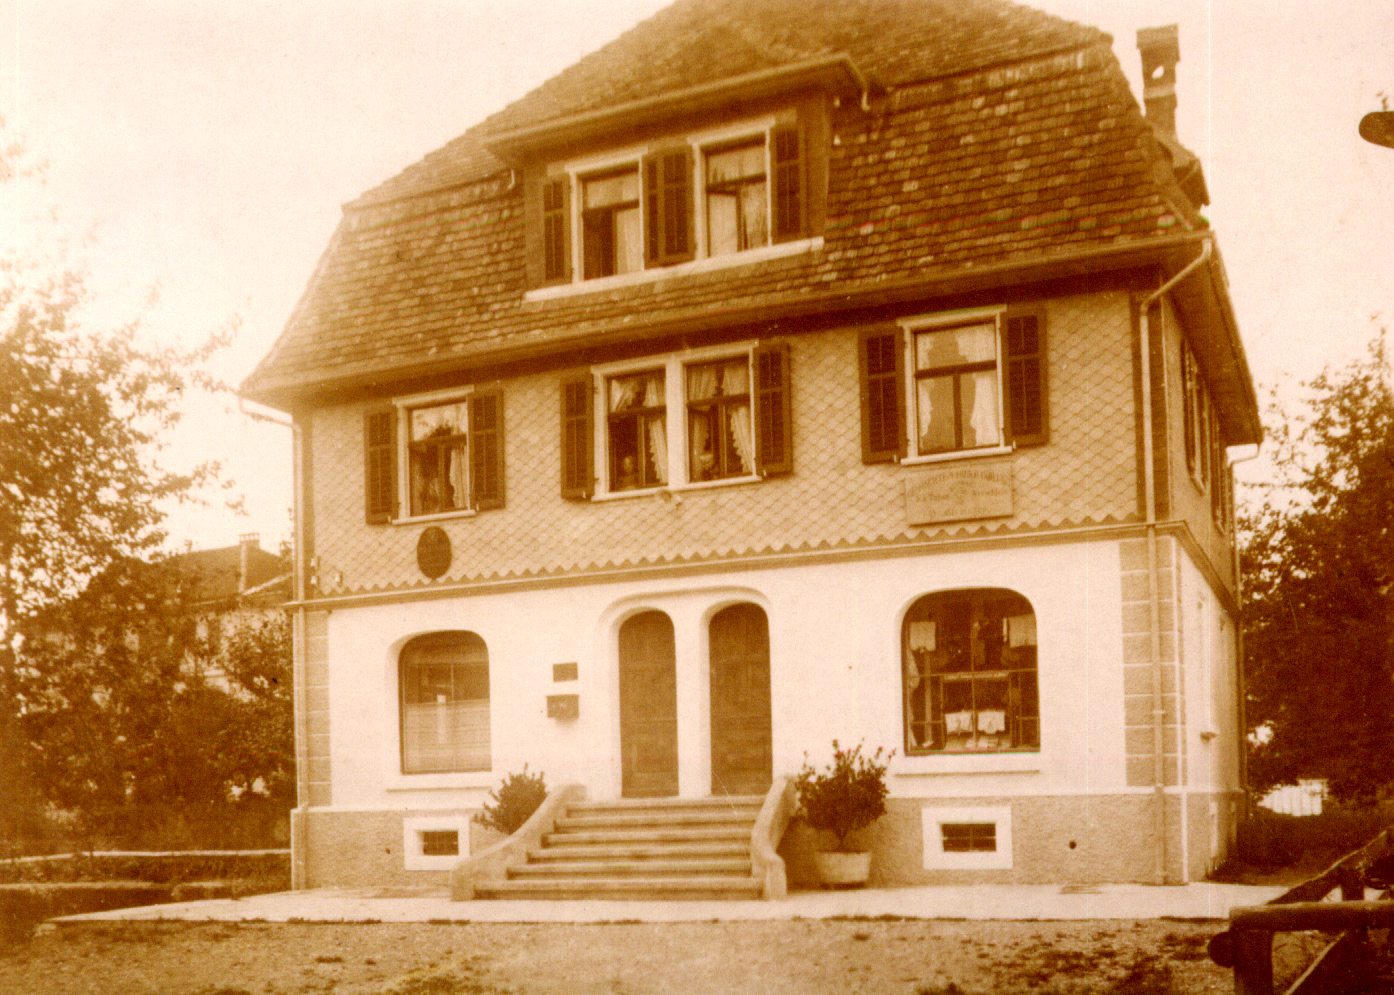 Paulihaus im Jahre 1900